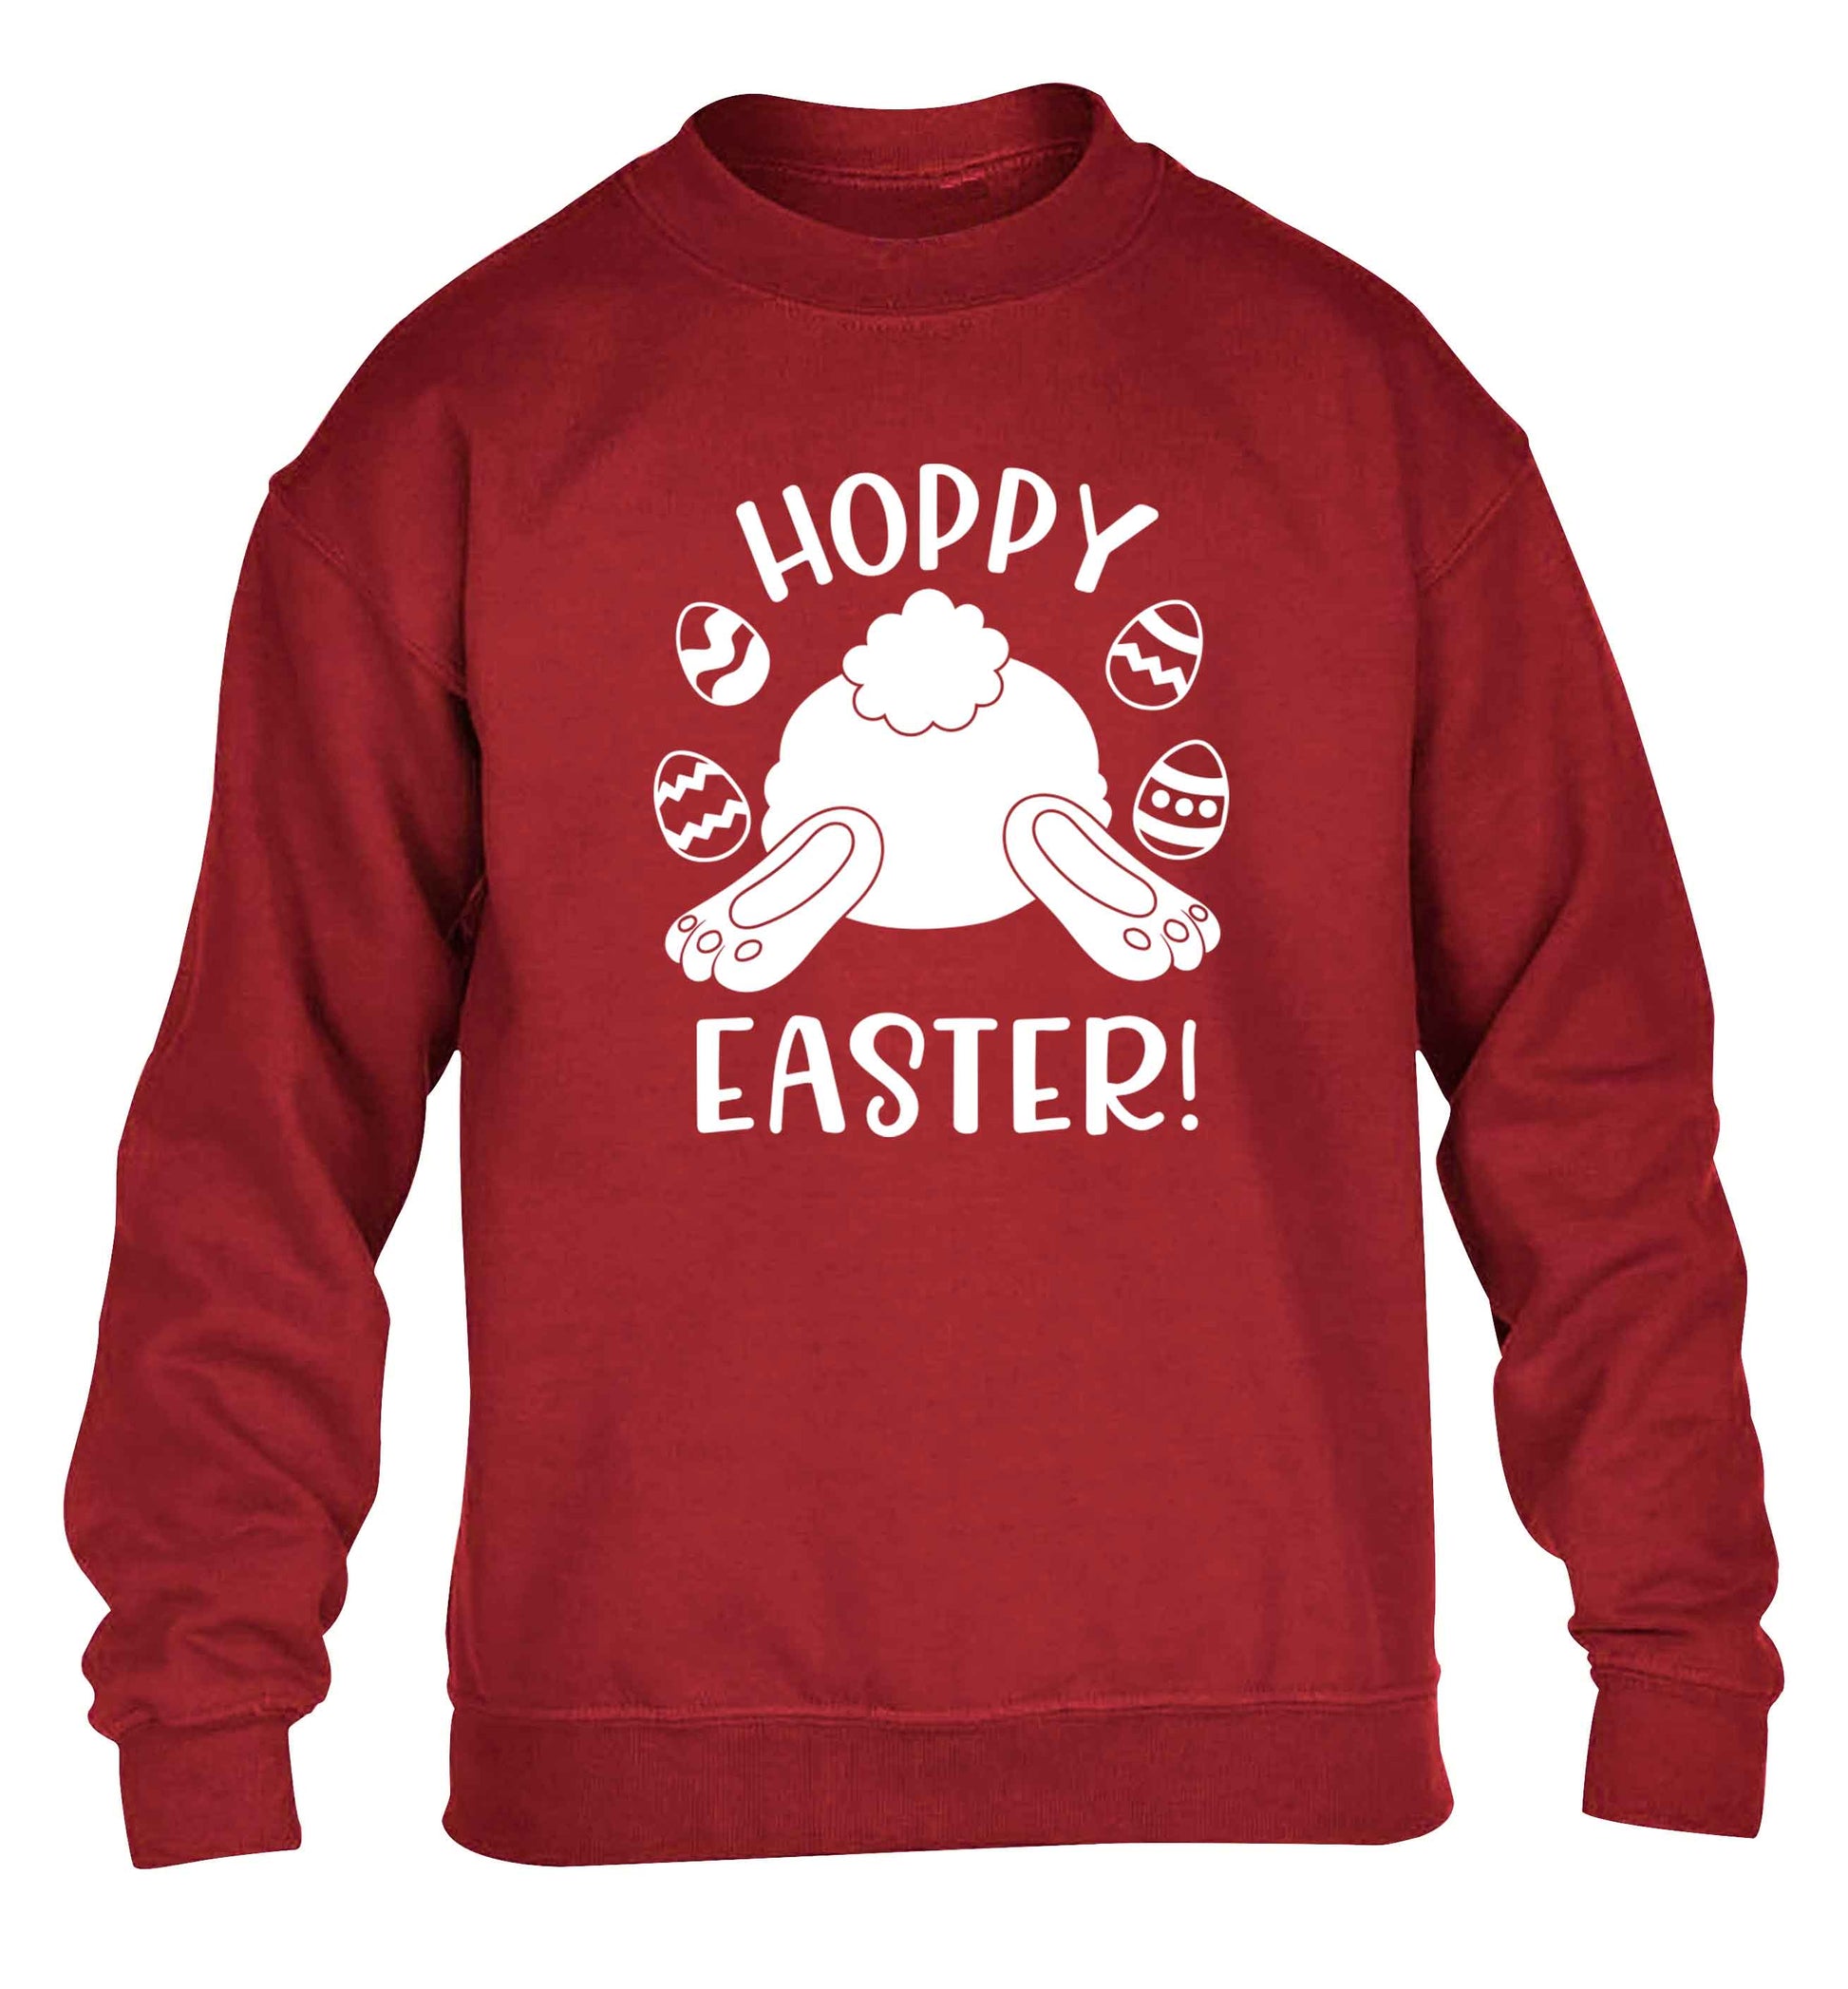 Hoppy Easter children's grey sweater 12-13 Years